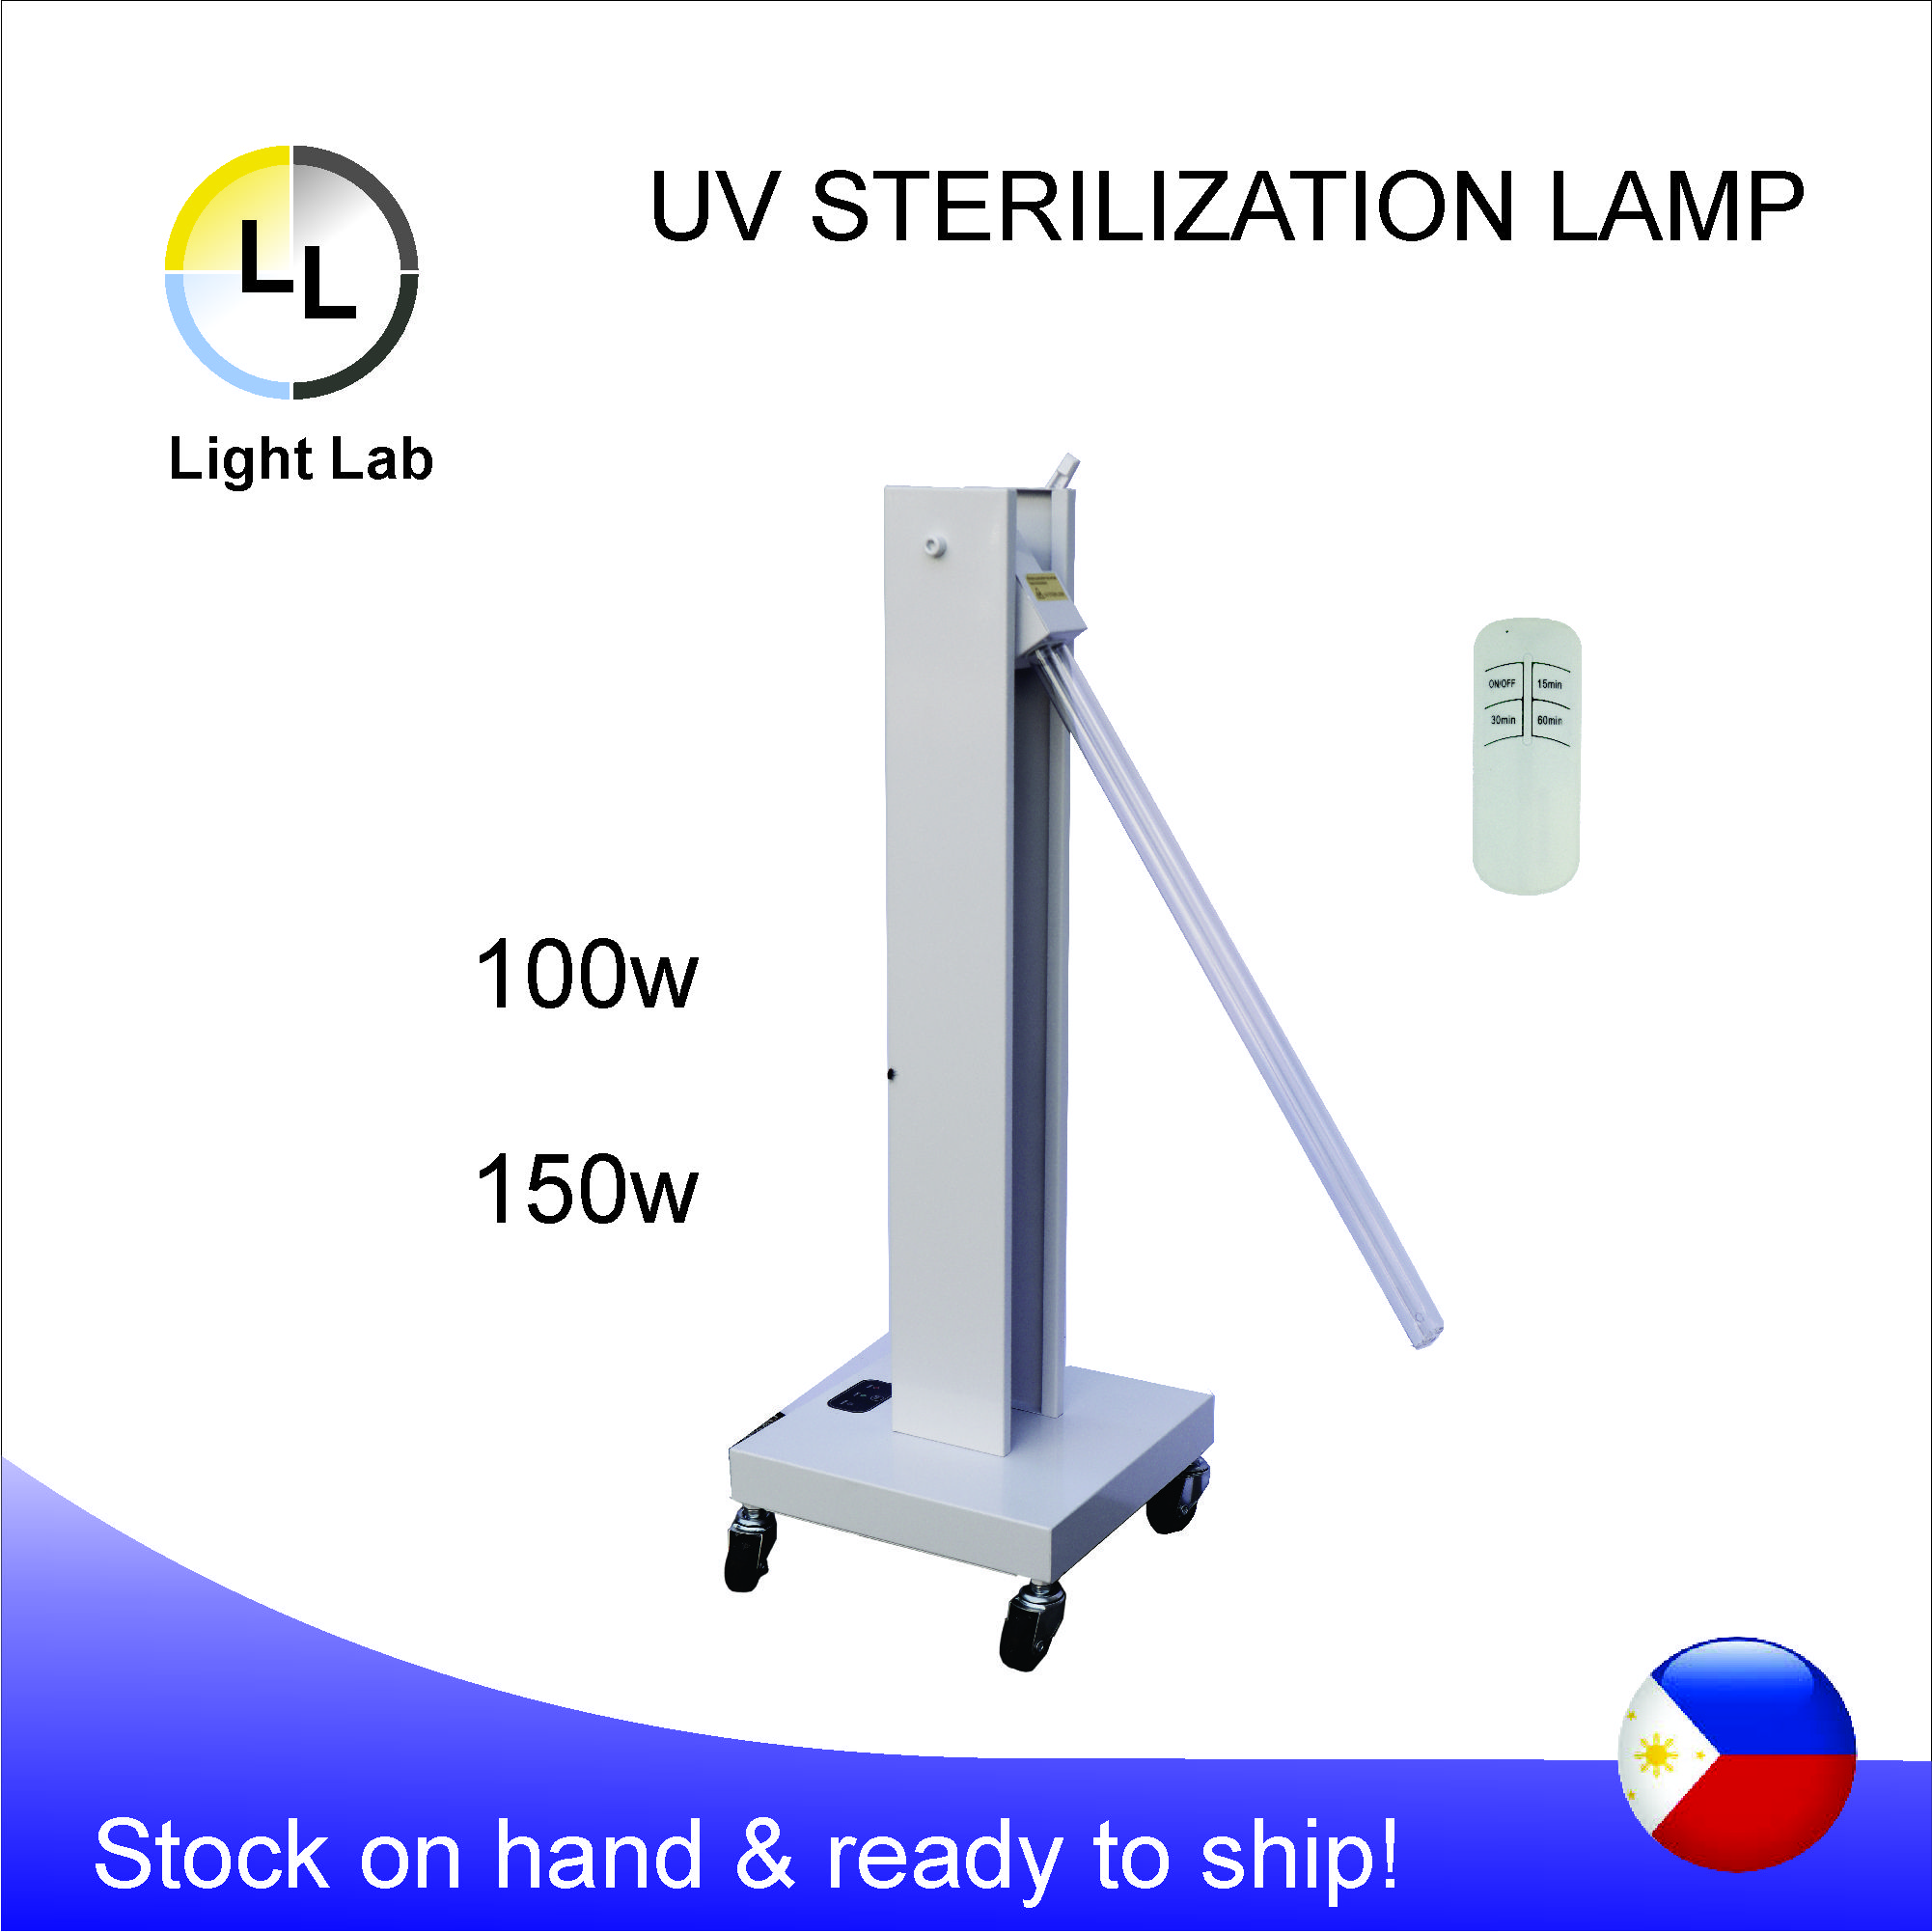 Disinfection Lamp 100W UV Light Sterilizer Portable Sterilization Lamp UVC Anti-bacteria Germicidal Lamp Ozone Germicidal Lamp With Remote Control,Kills 99.9% of Mold Bacteria Germs